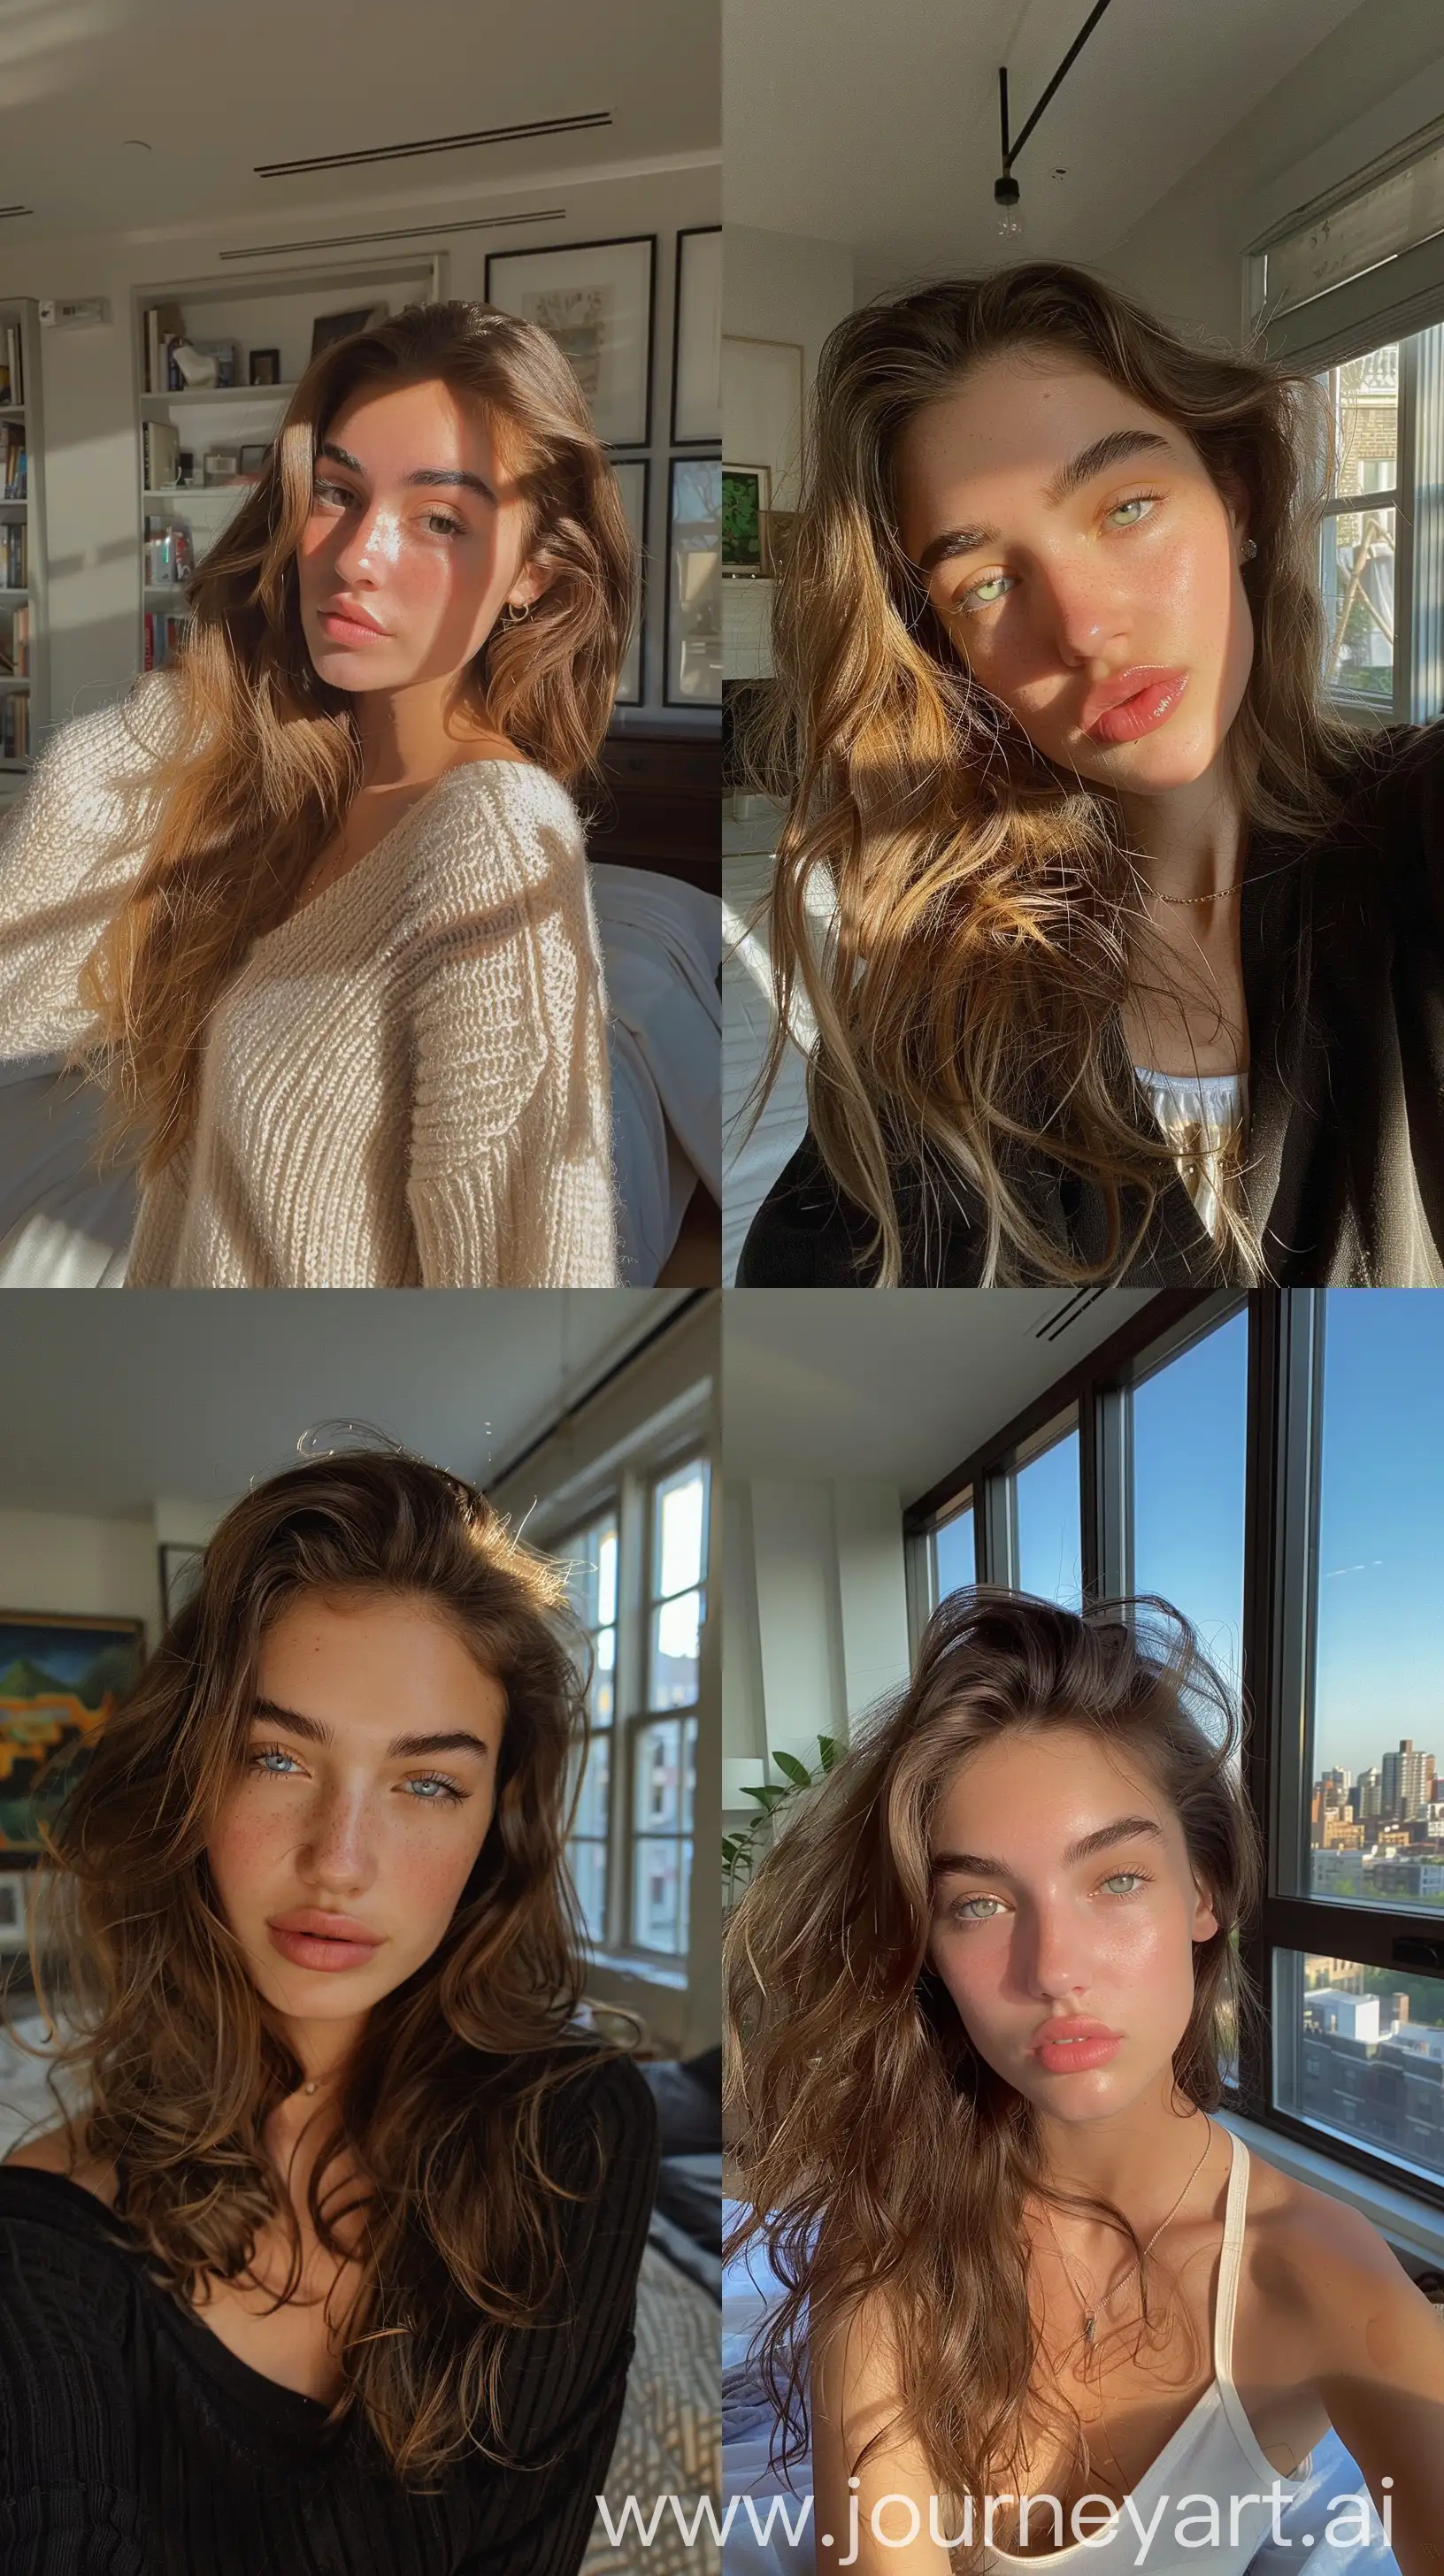 Aesthetic-Instagram-Selfie-of-Haley-Kalils-15YearOld-Sister-in-a-Fancy-New-York-Apartment